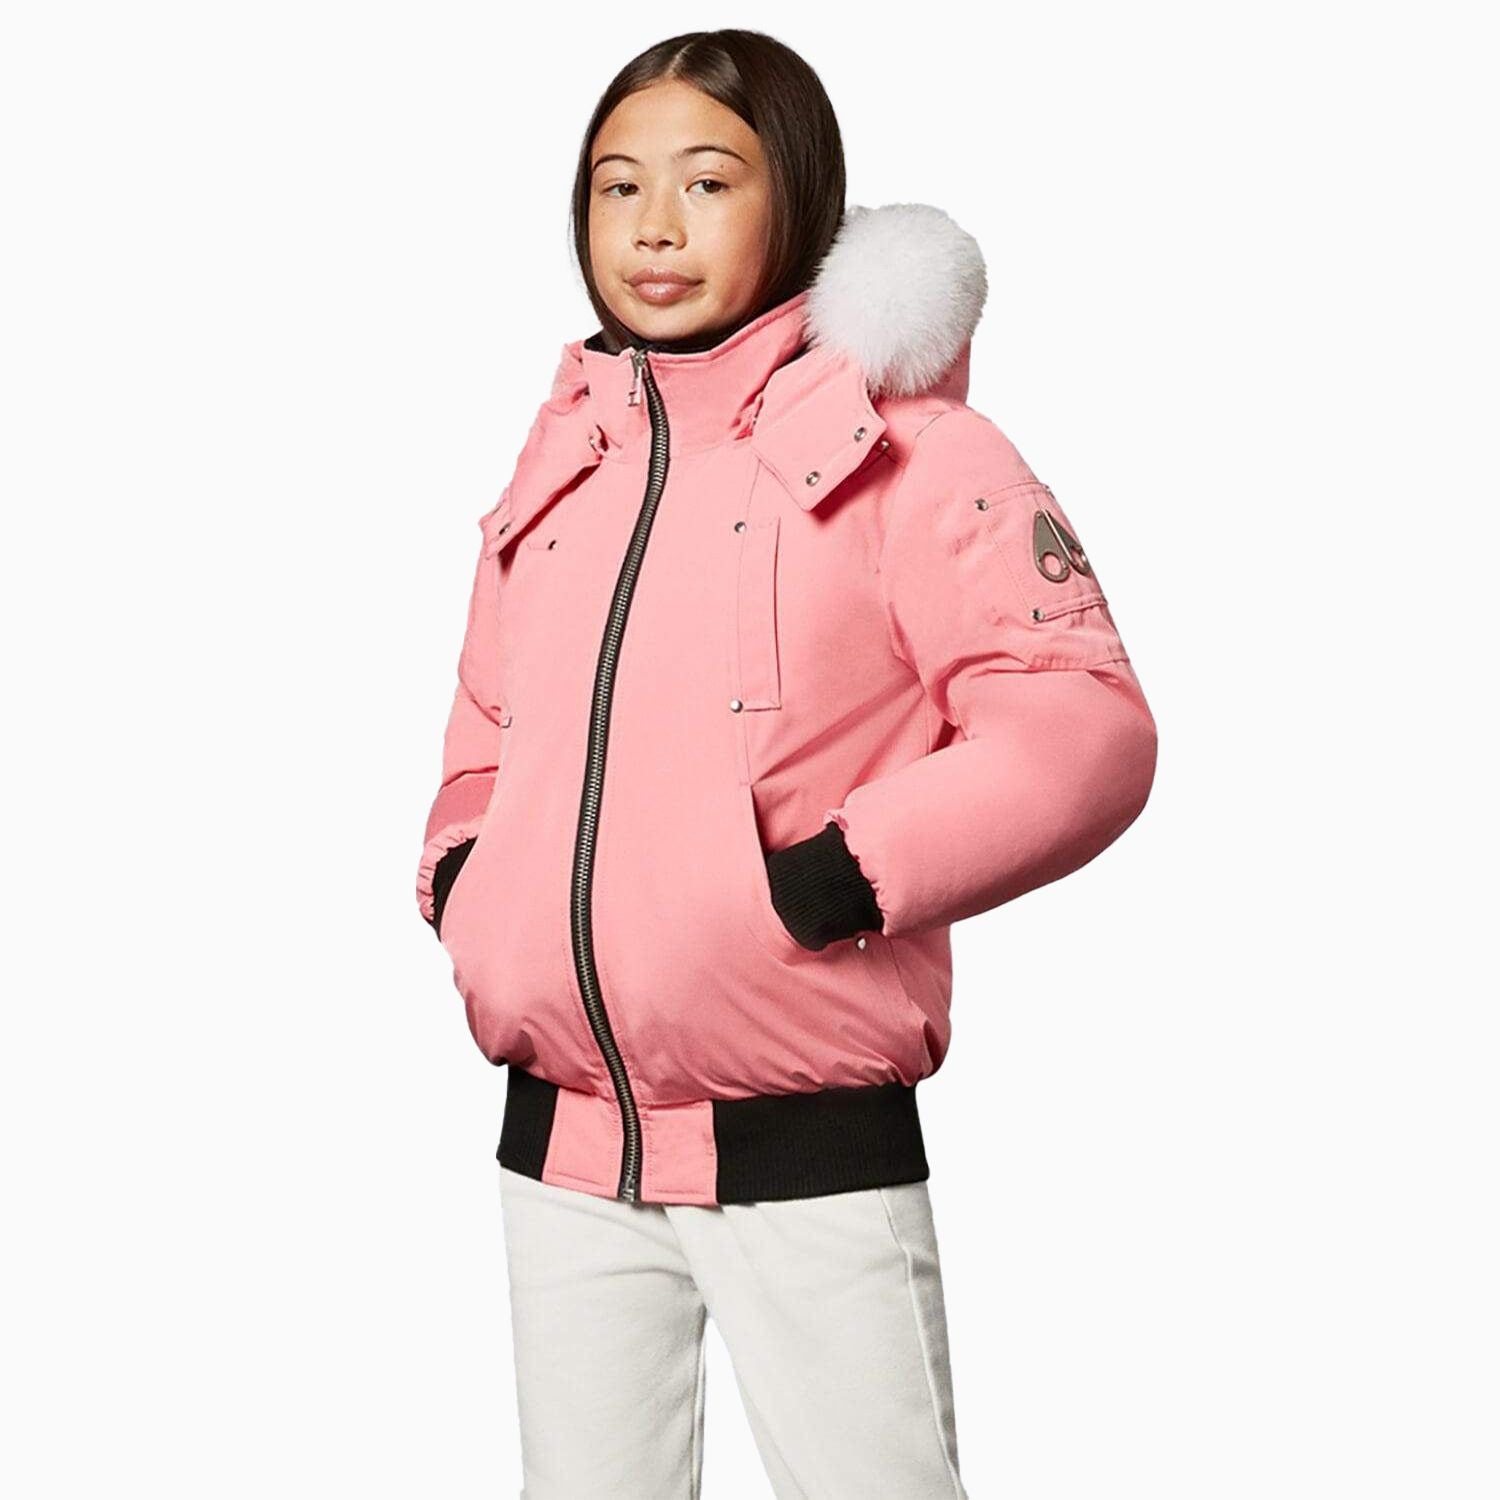 Moose Knuckles Kid's Bomber Jacket With Fur Hood - Color: Arctic Rose - Kids Premium Clothing -